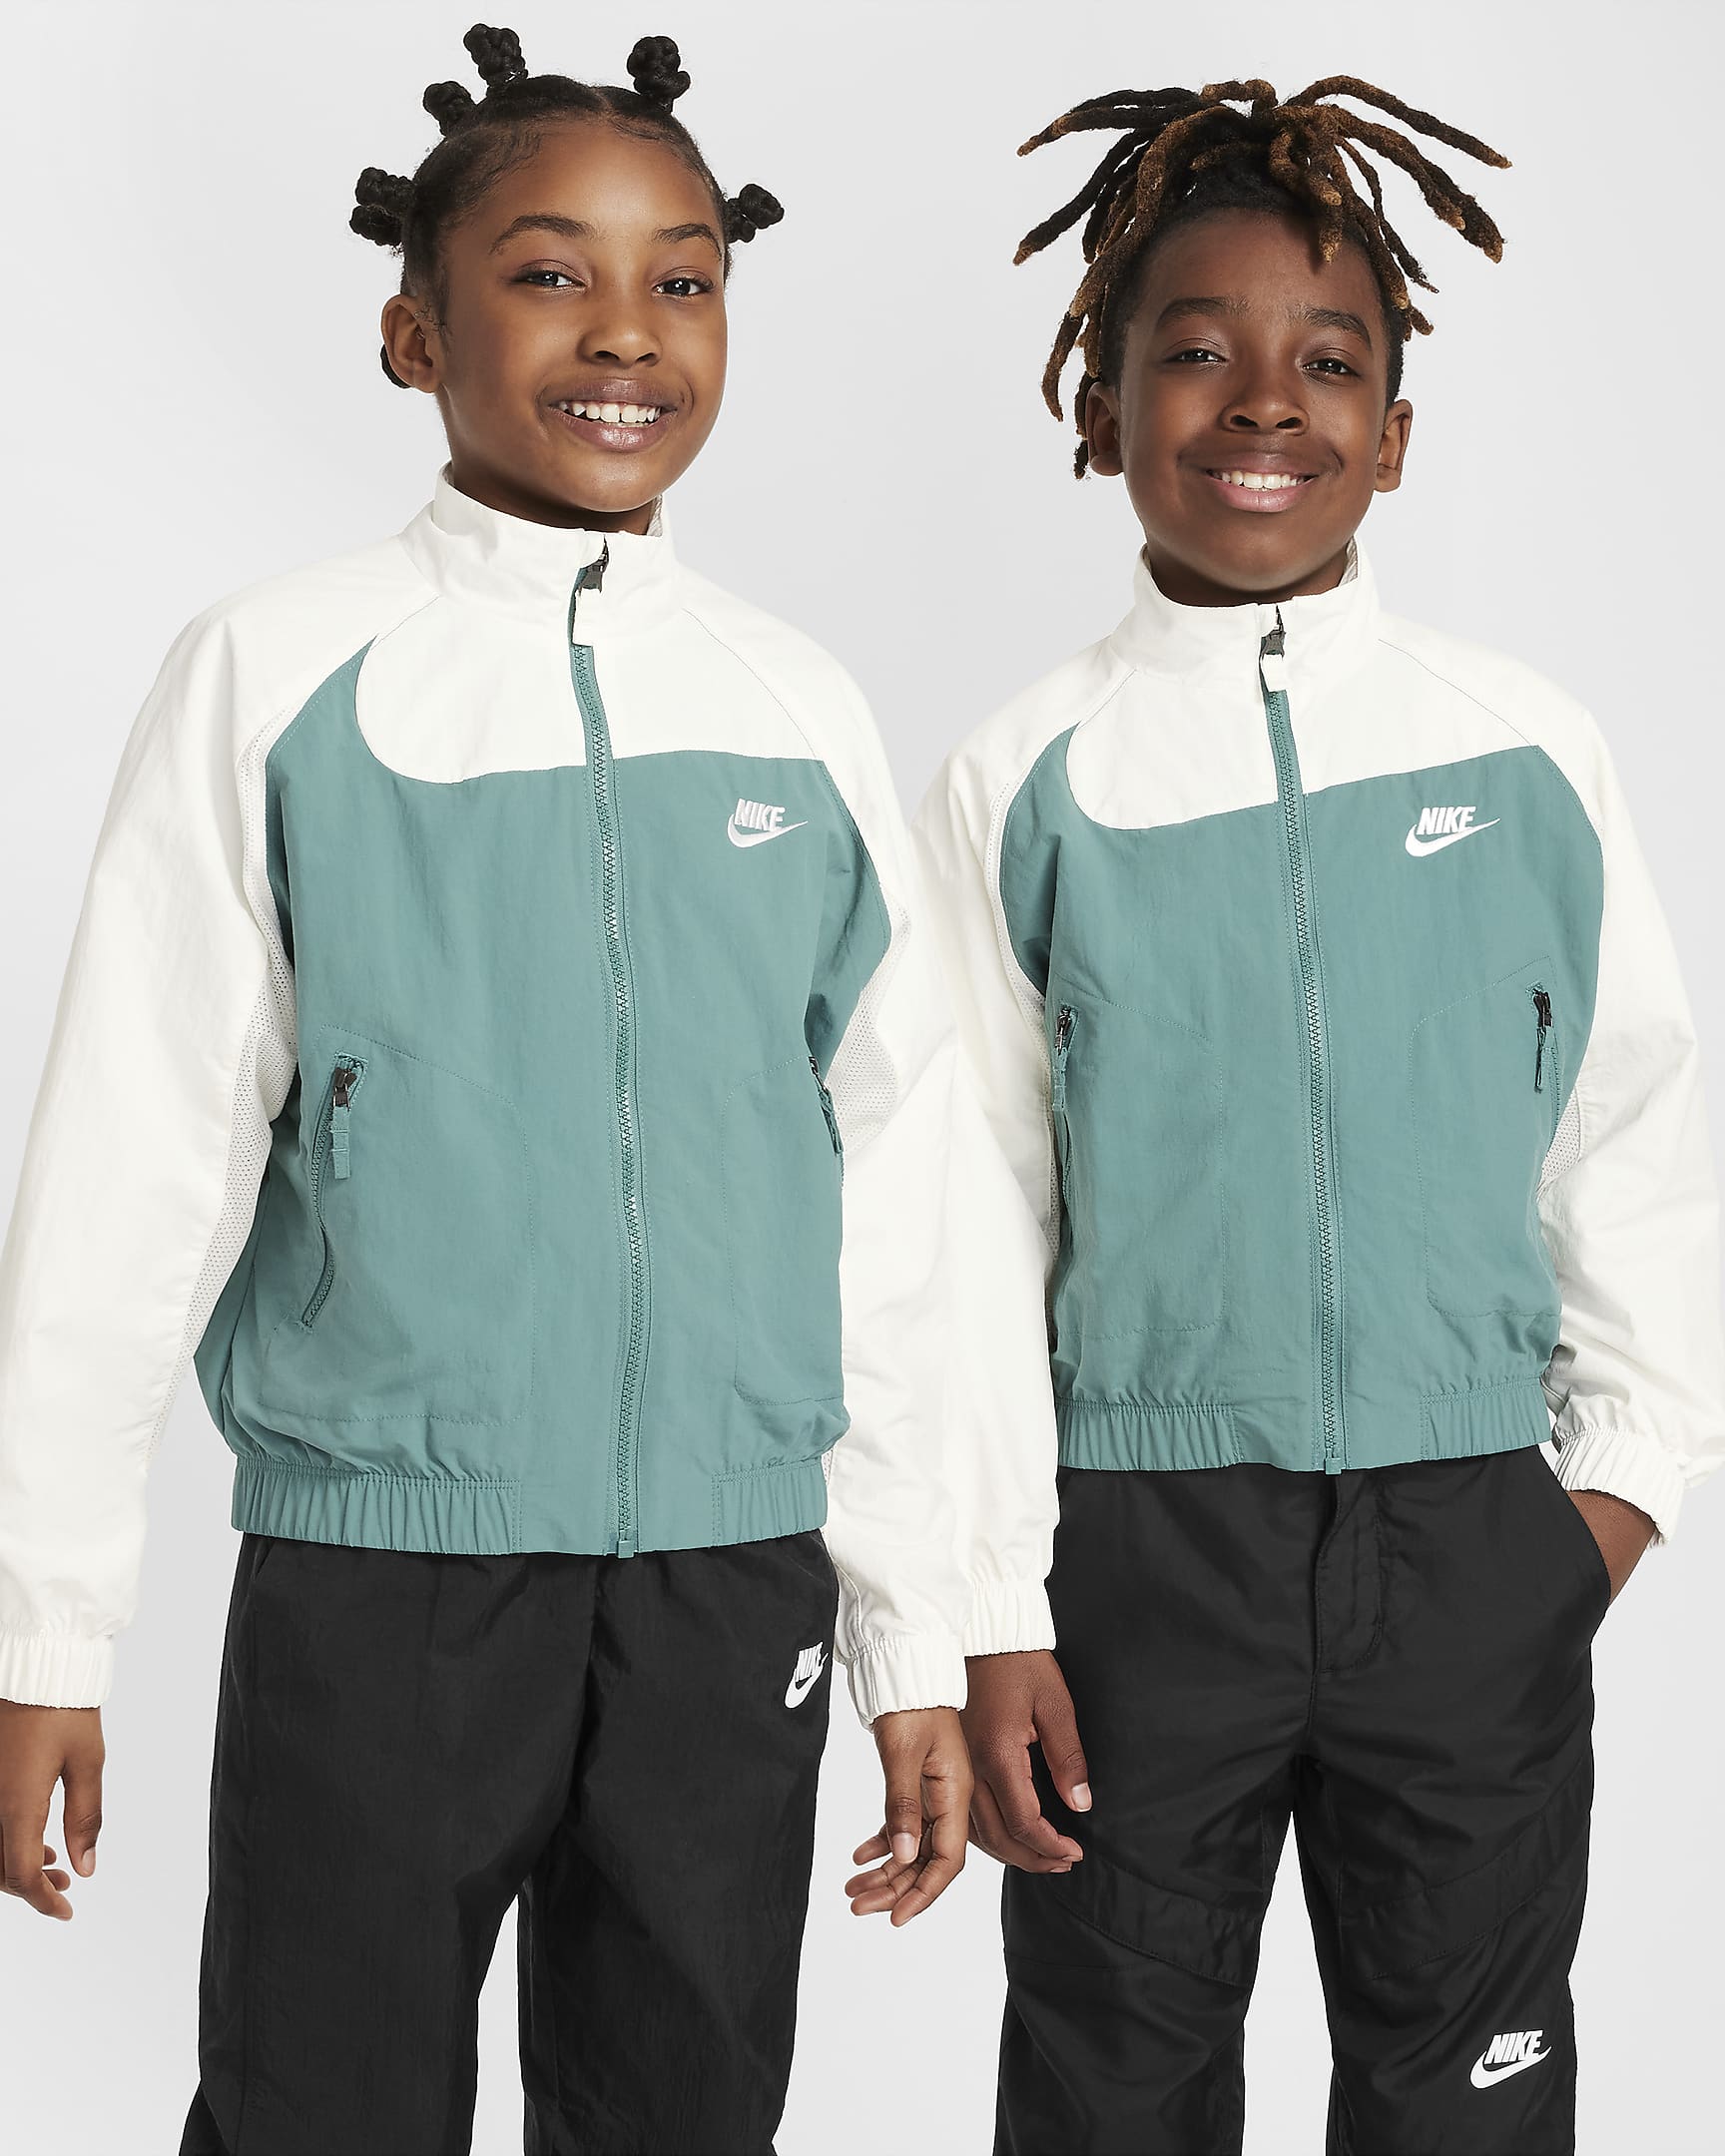 Nike Sportswear Amplify Older Kids' Woven Full-Zip Jacket - Bicoastal/Sail/White